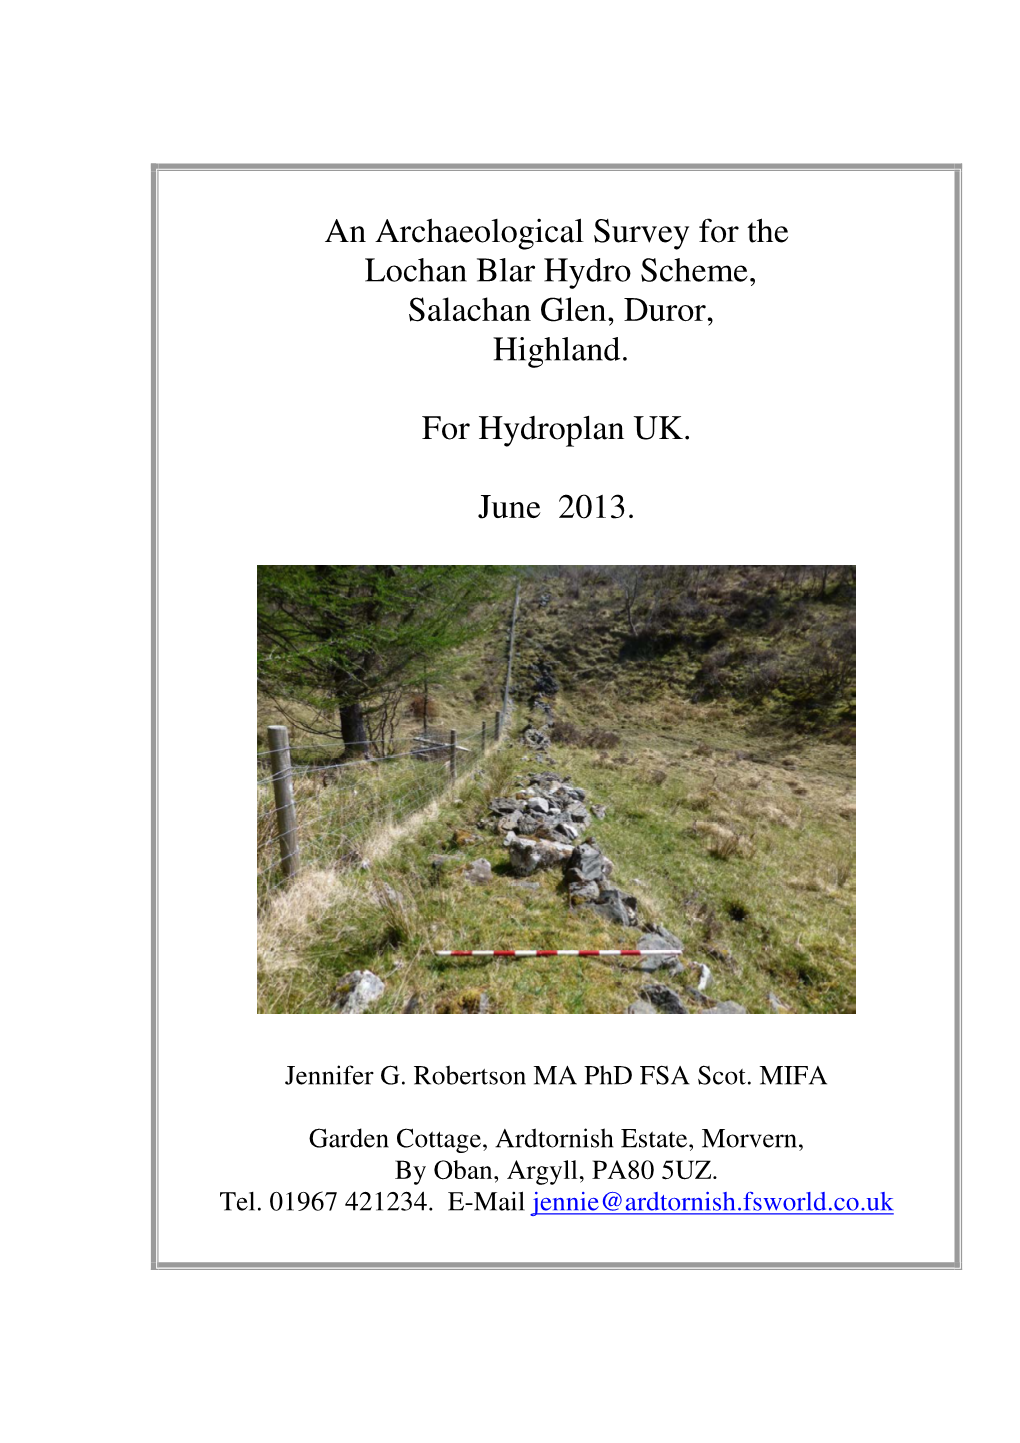 An Archaeological Survey for the Lochan Blar Hydro Scheme, Salachan Glen, Duror, Highland